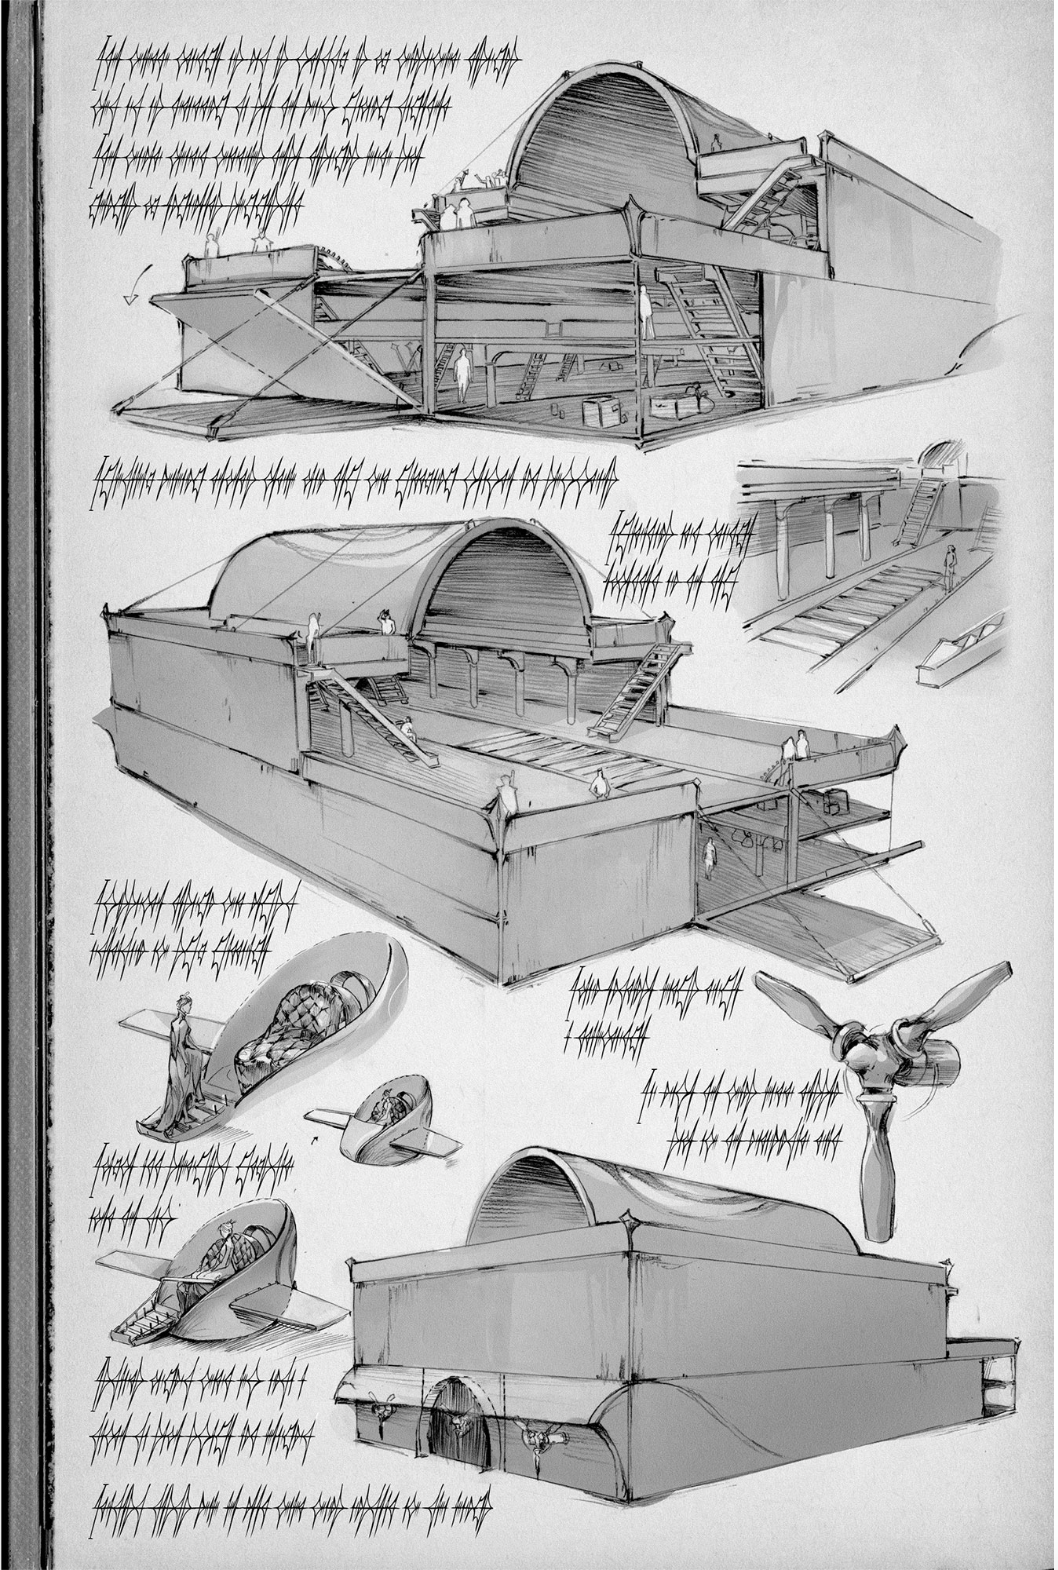 Sketch from Navani's Notebook: The Fourth Bridge